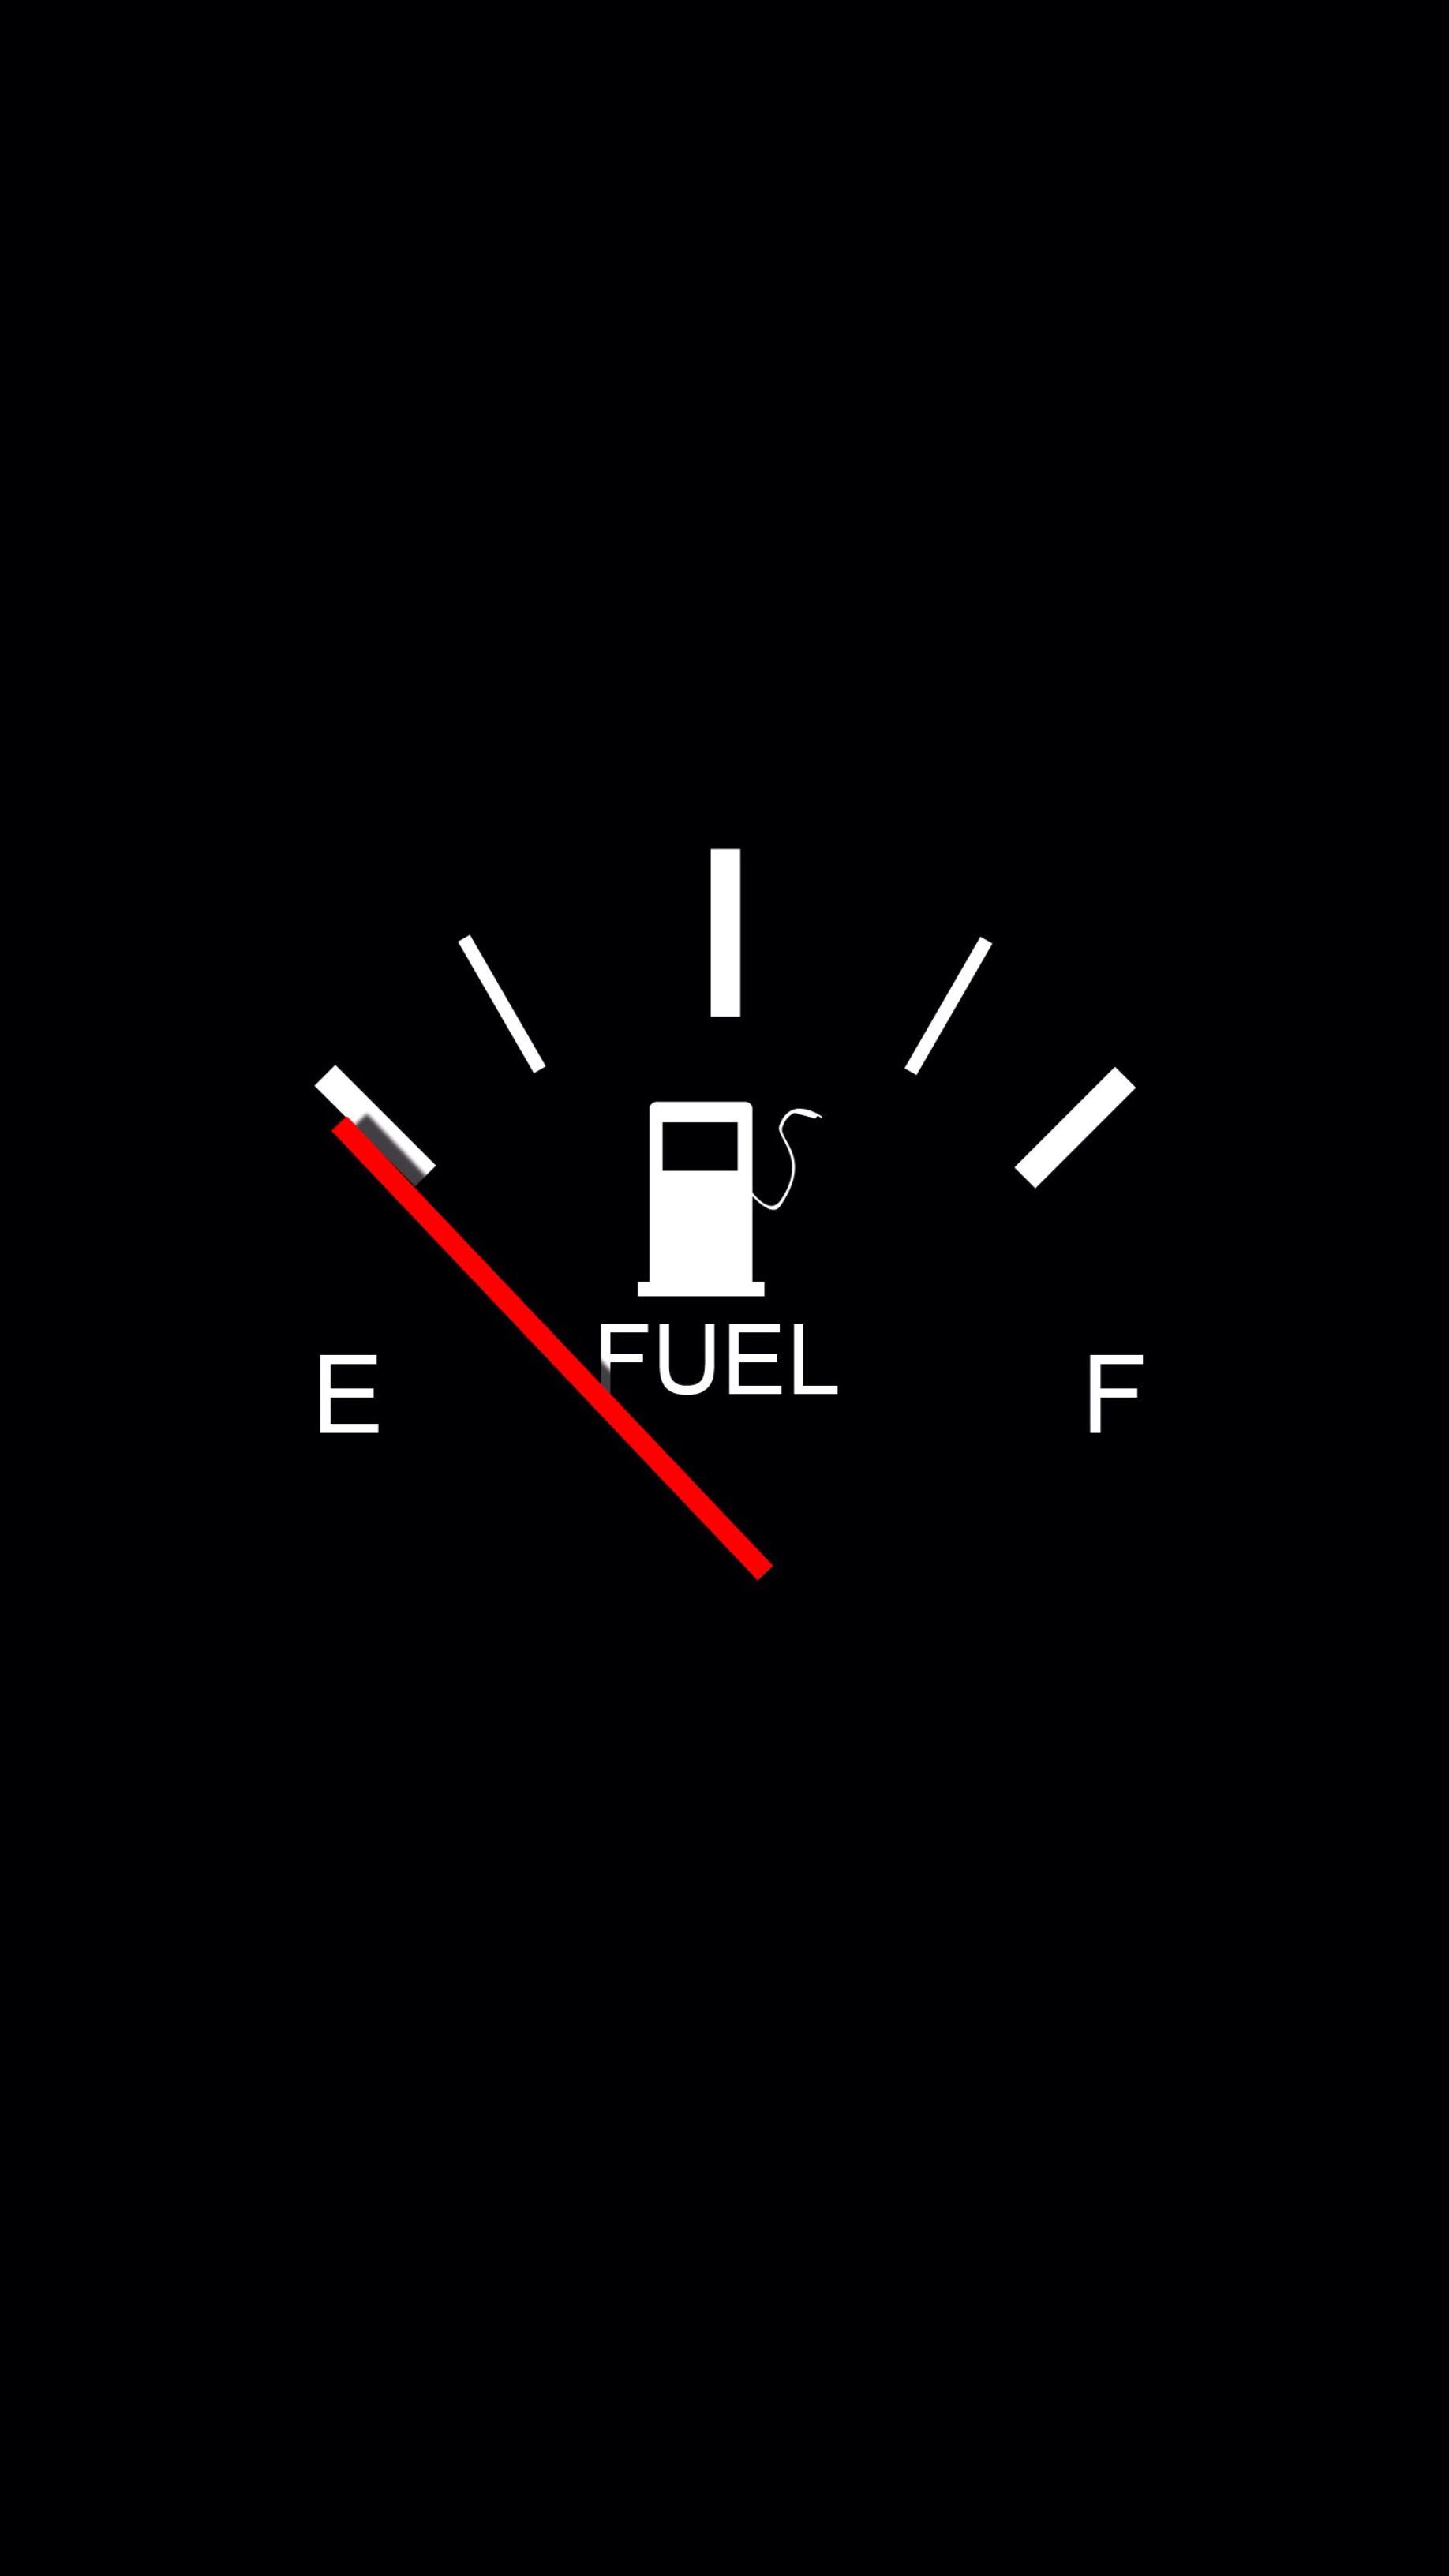 1000 Free Fuel  Petrol Images  Pixabay